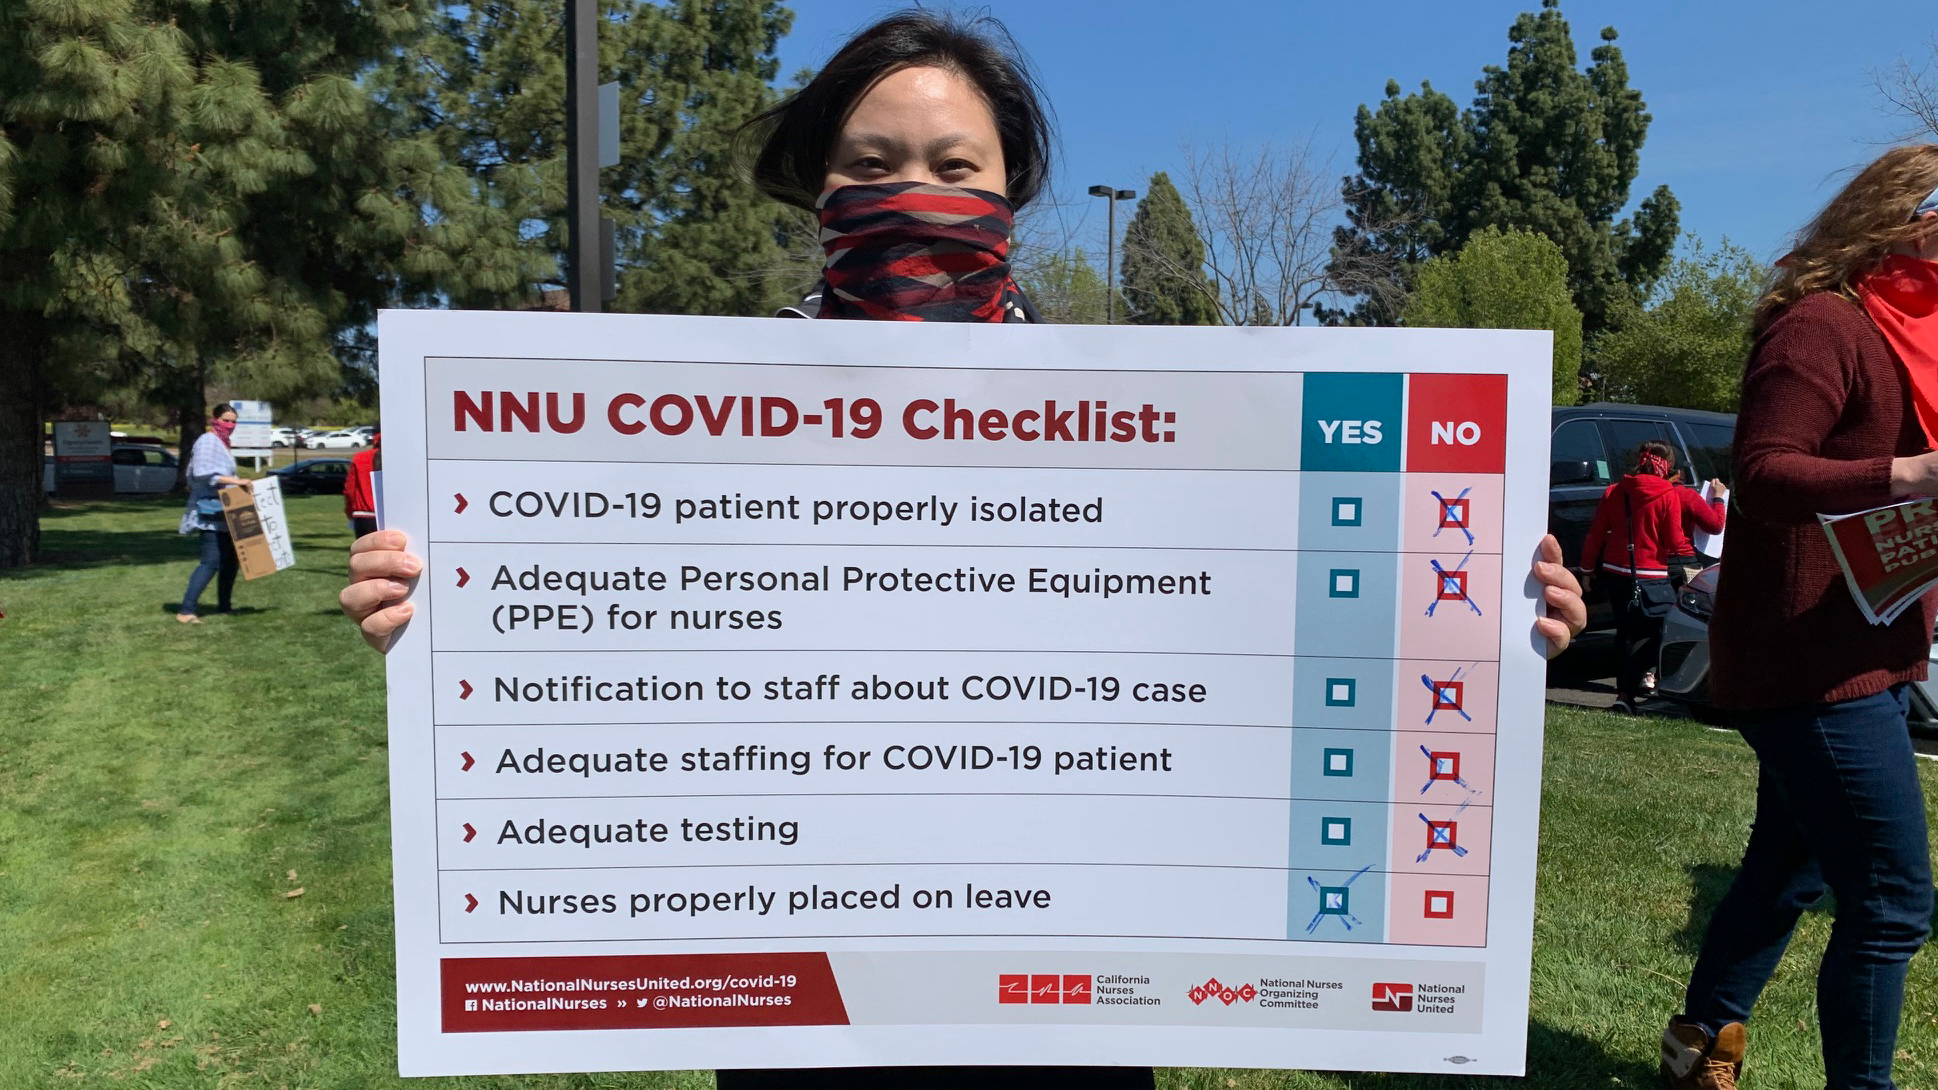 LA nurse holds sign "NNU Covid-19 Checklist"